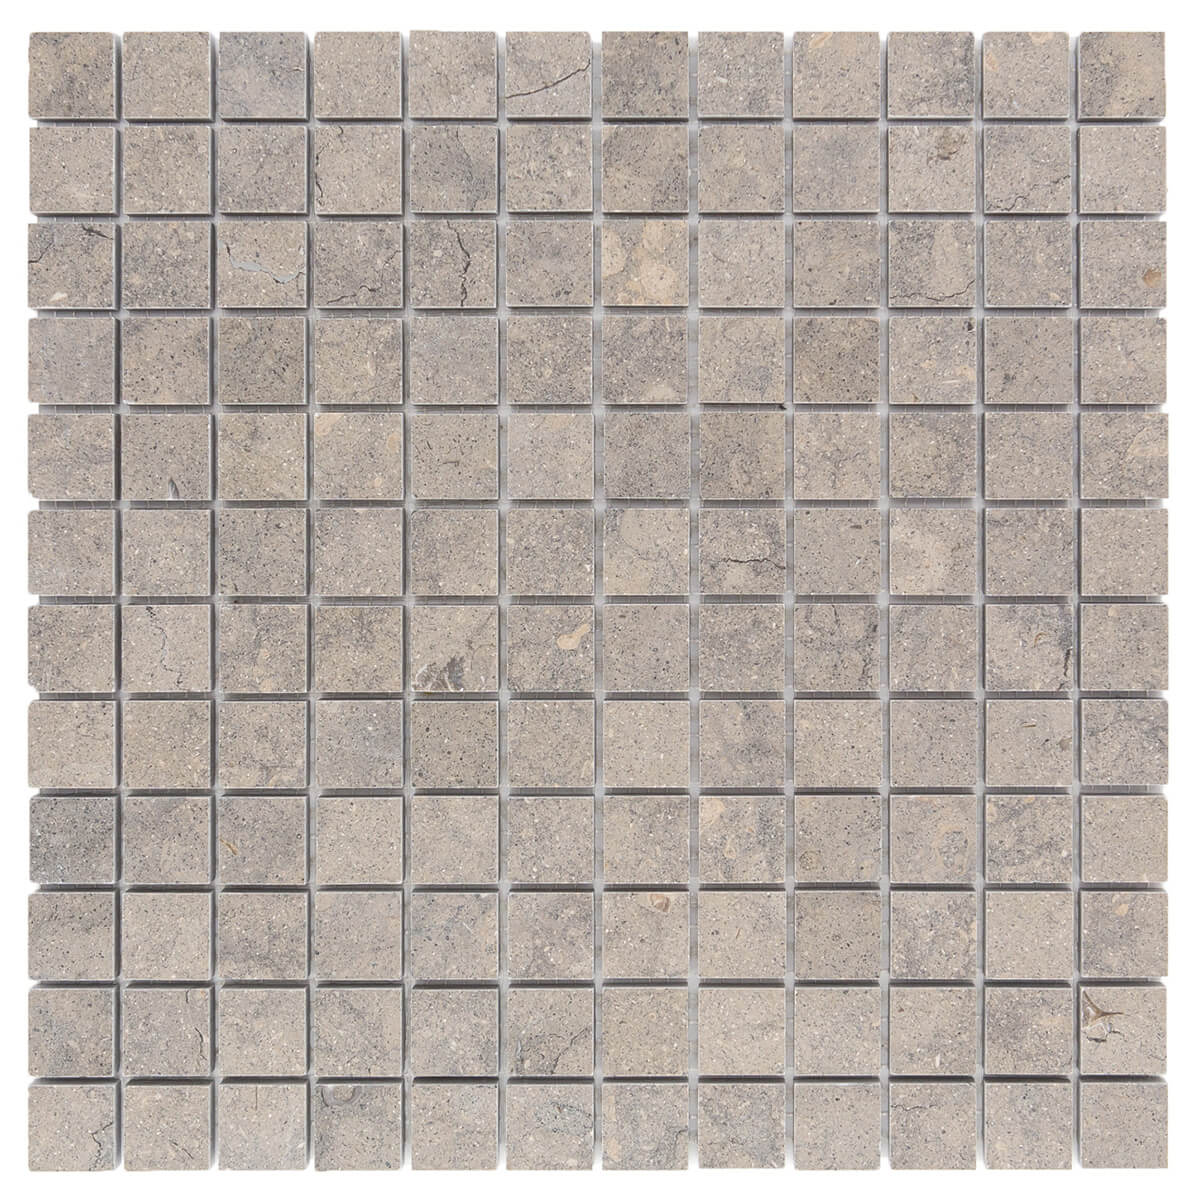 haussmann cote d azur limestone square mosaic tile 1x1 honed